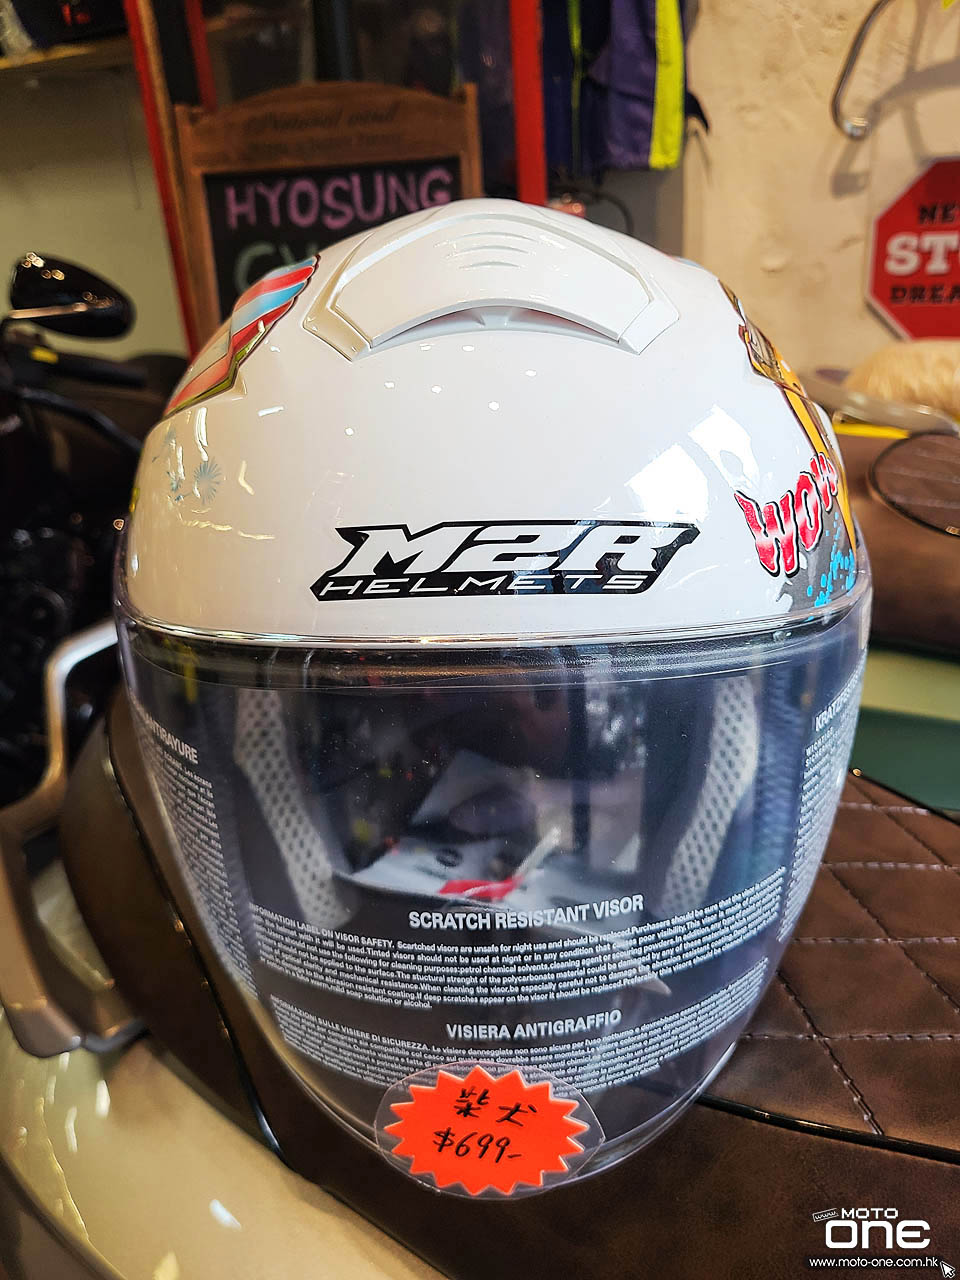 2020 M2R FR-1 helmet